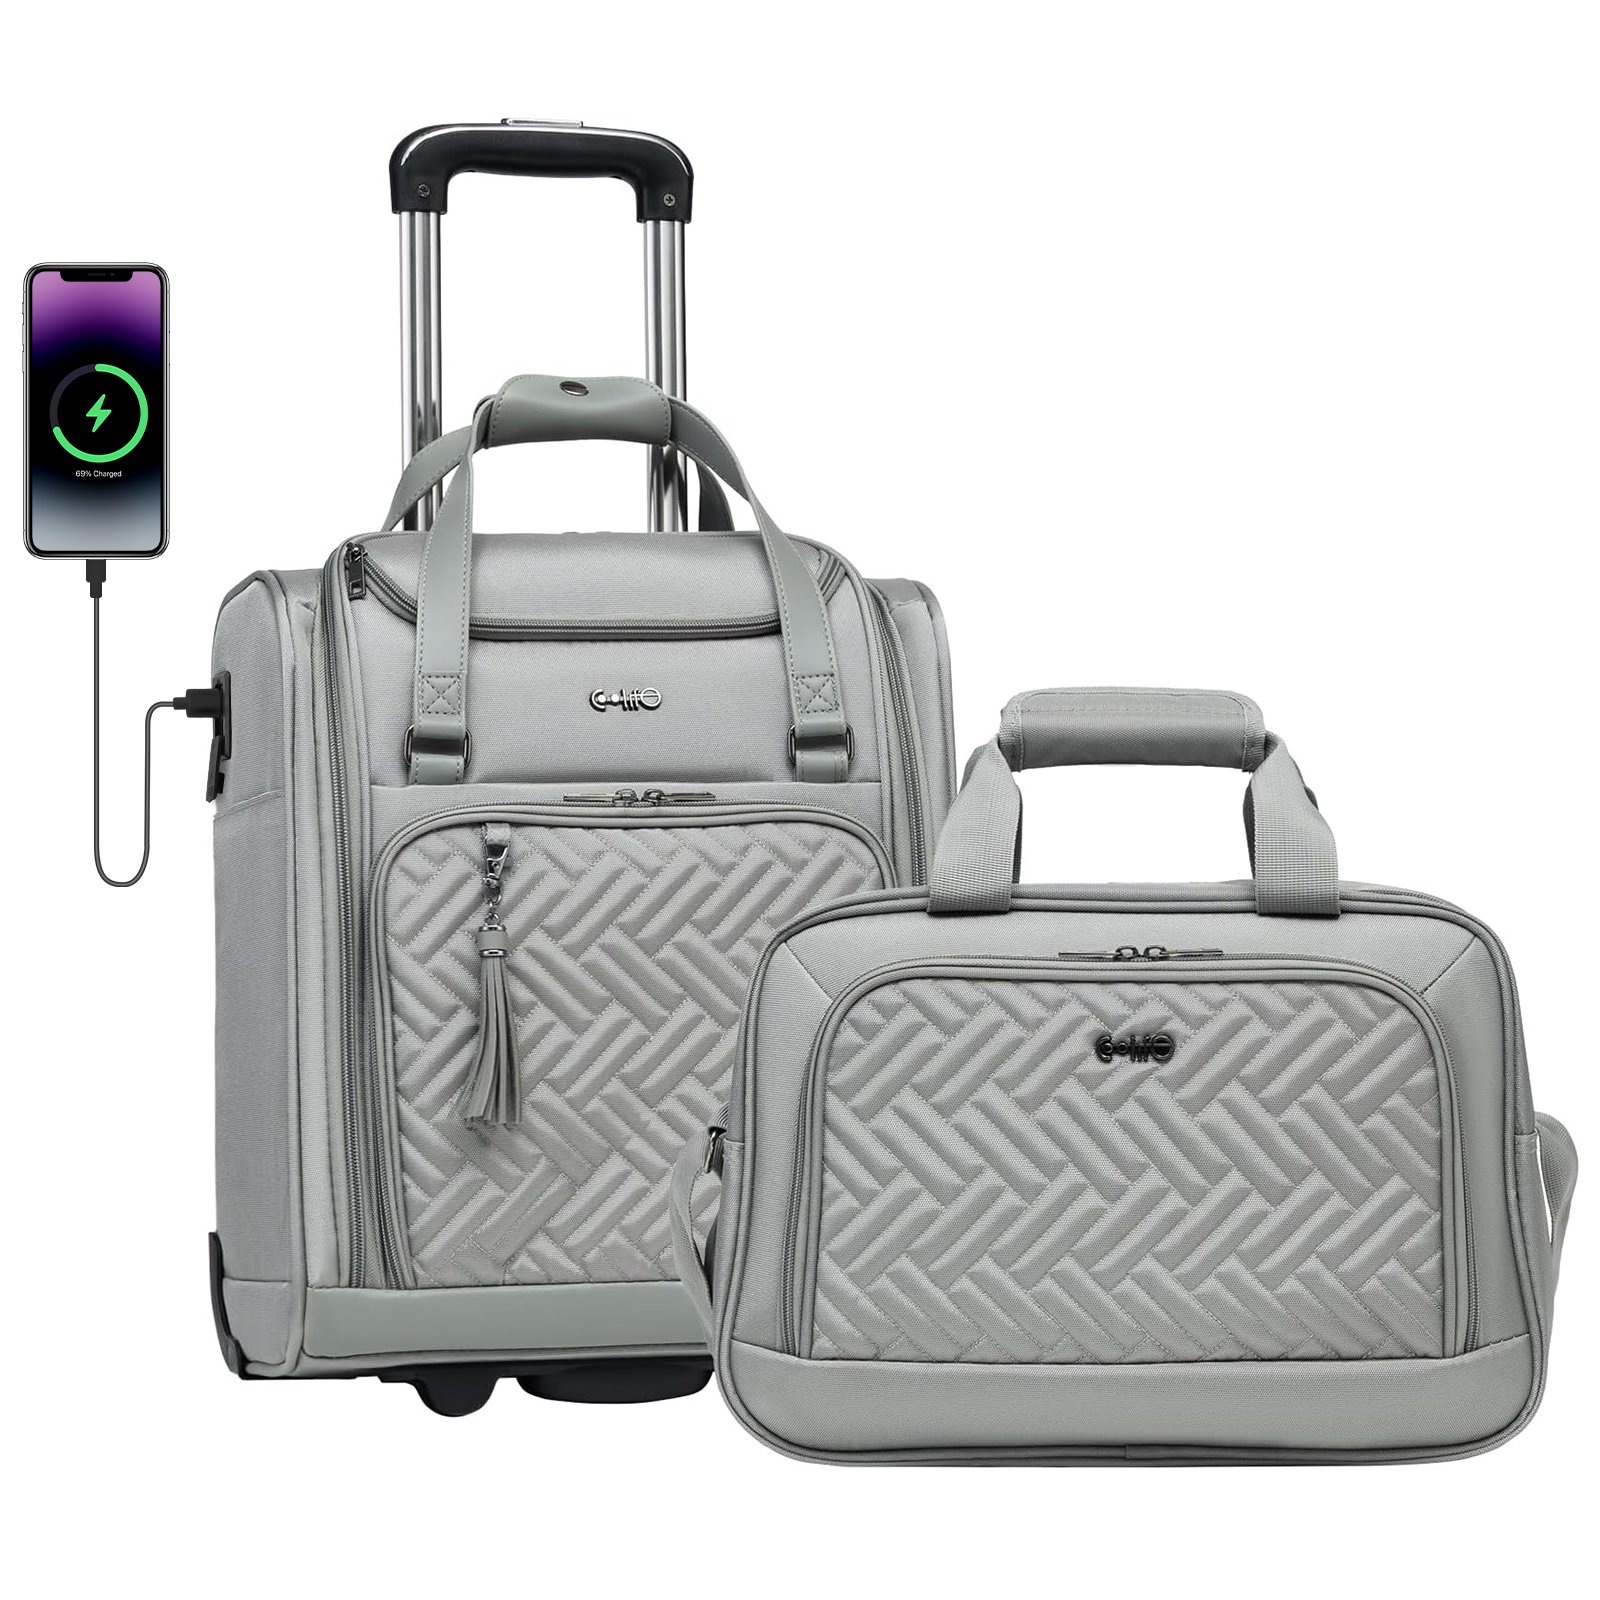 Coolife Luggage Carry On Luggage Underseat Luggage Suitcase Softside Wheeled Luggage Lightweight Rolling Travel Bag Underseater